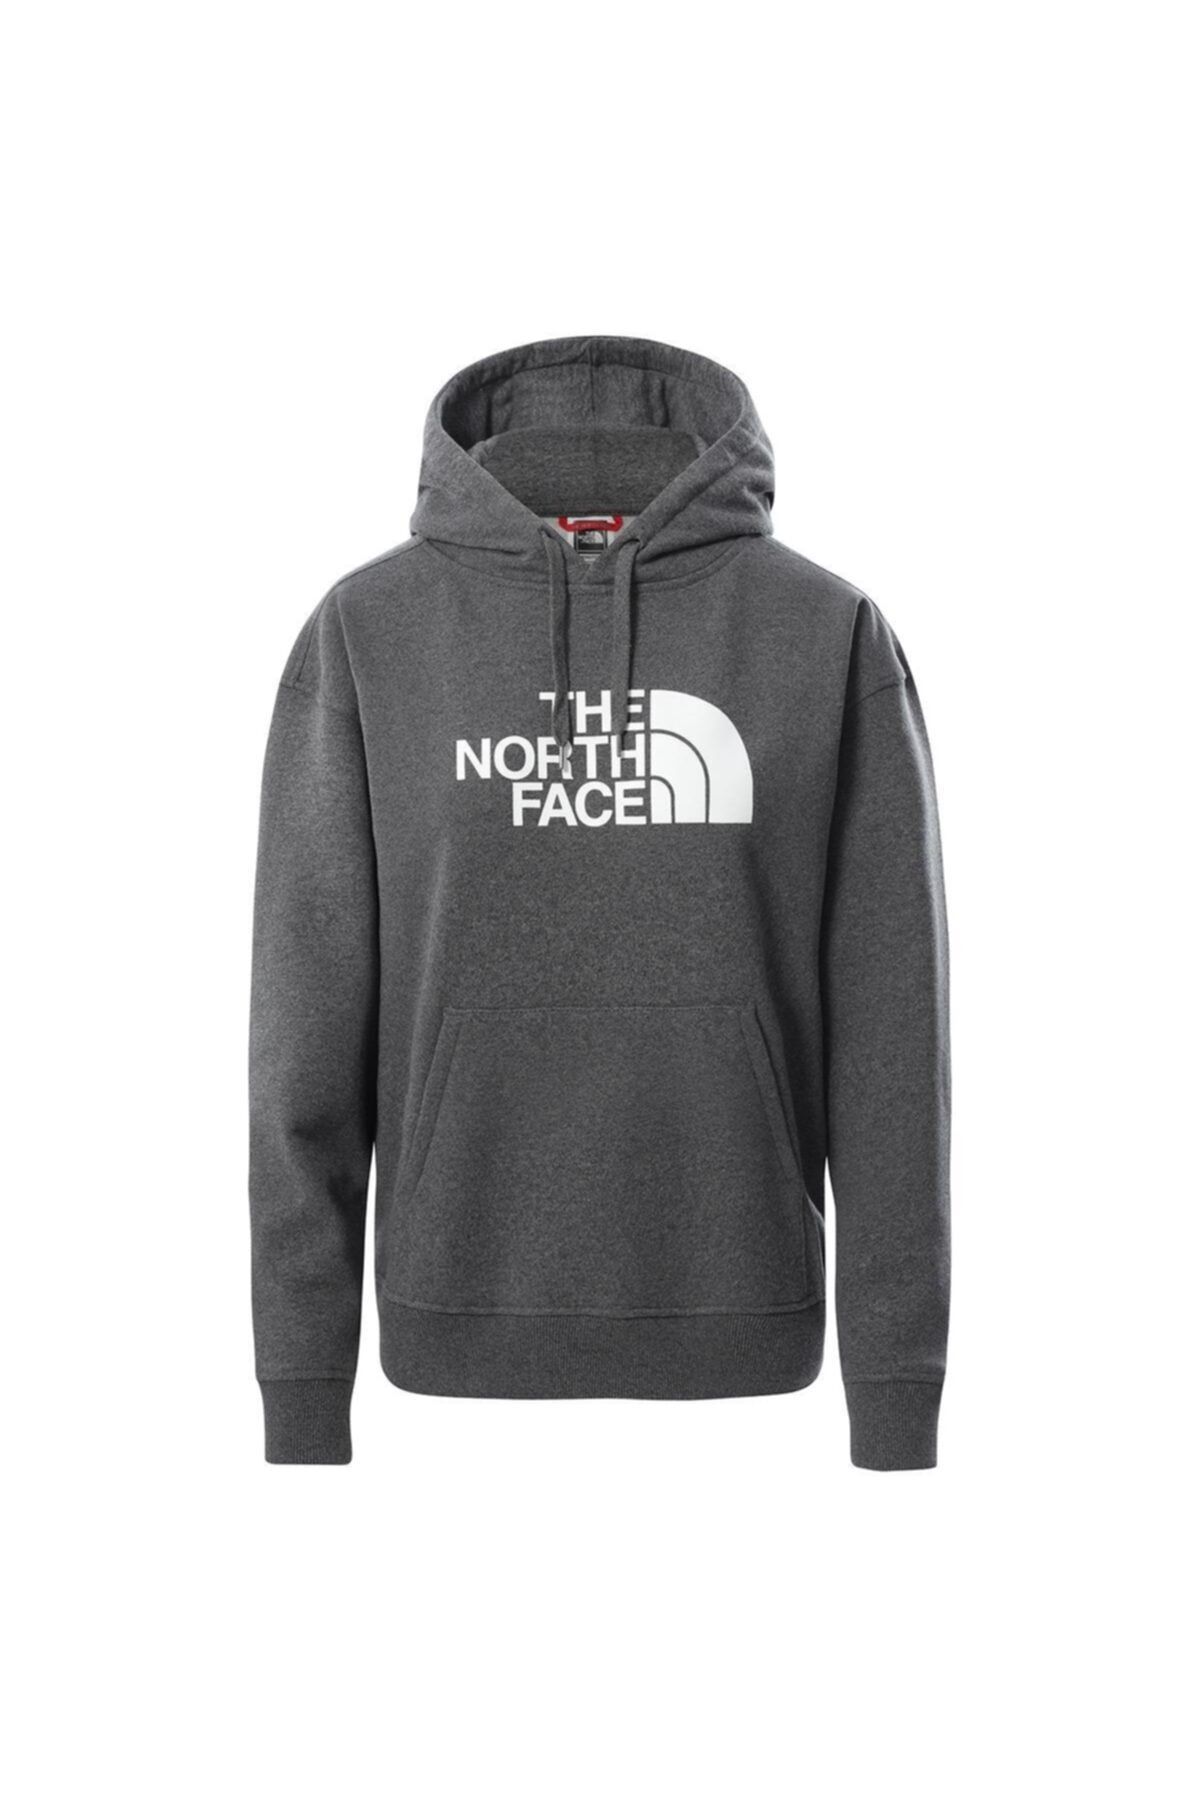 The North Face Kadın LIGHT DREKadın PEAK HOODIE    Sweat Shirt